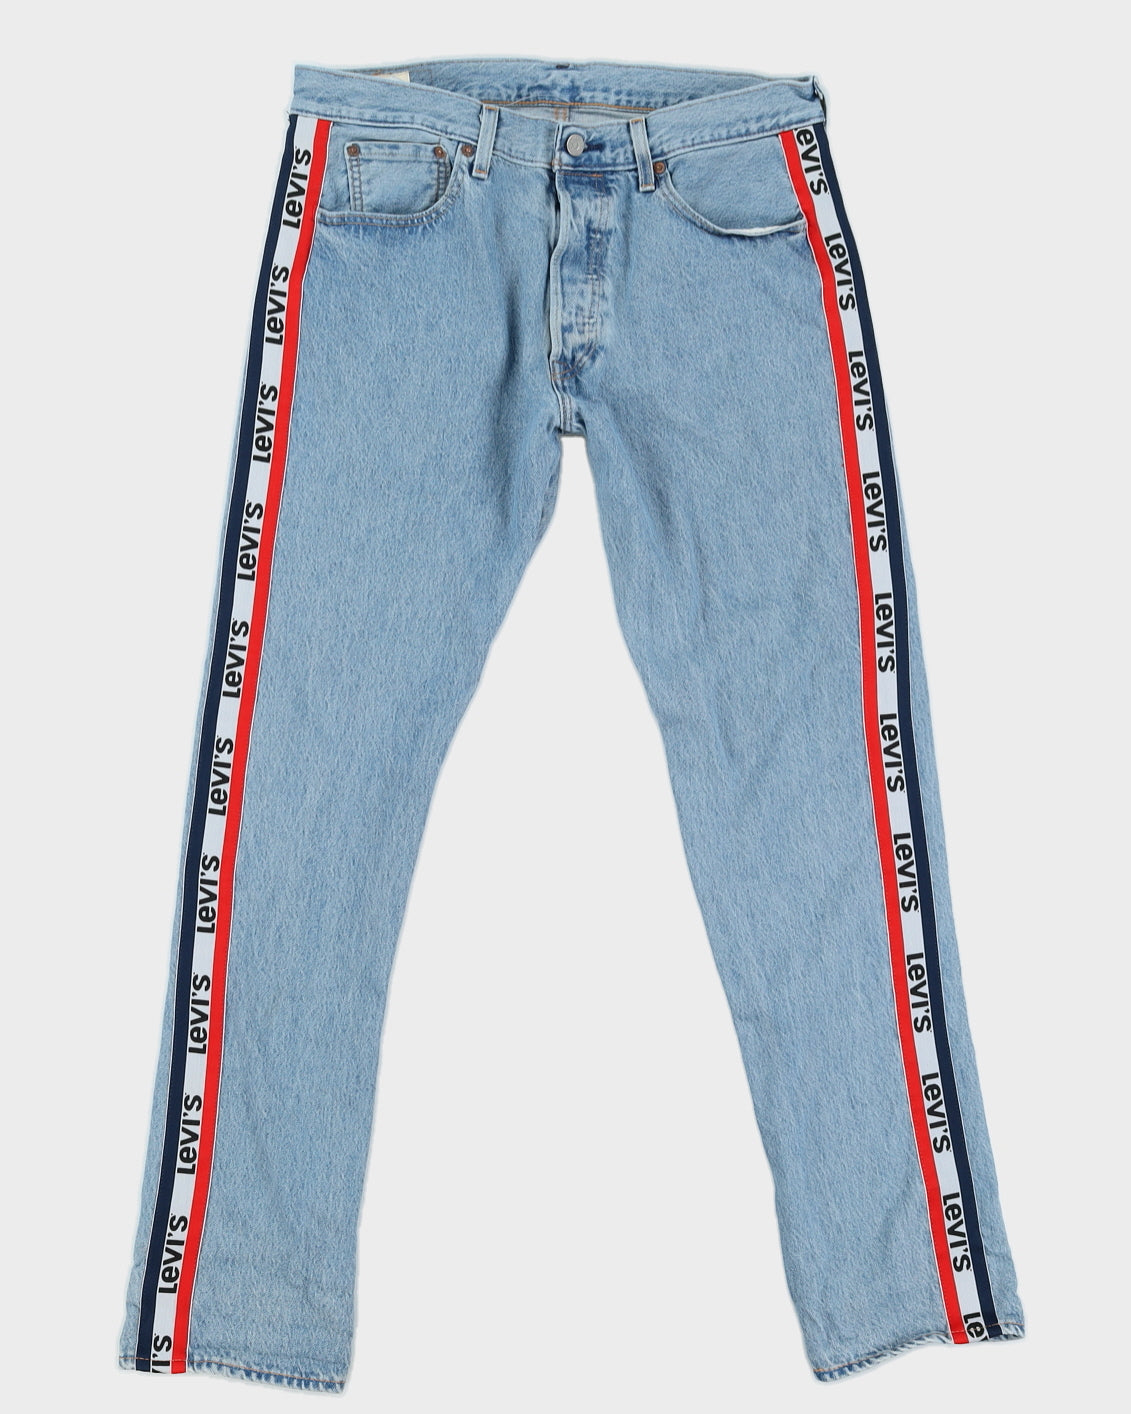 Levi's Medium Wash Branded 501 Jeans - W34 L34